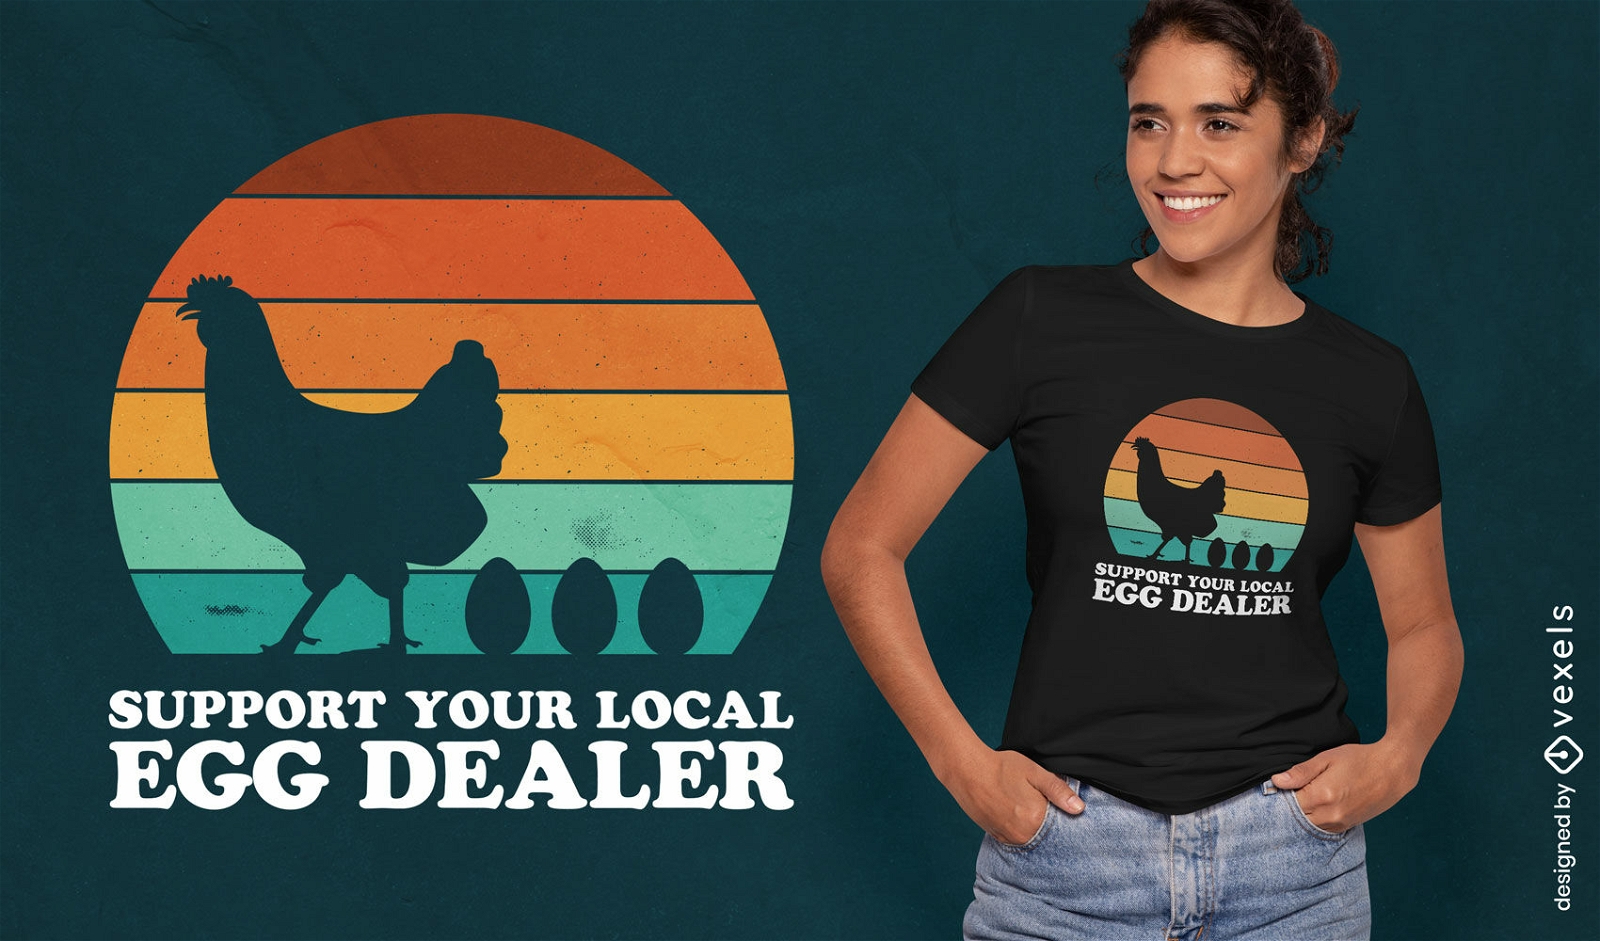 Support your local egg dealer t-shirt design